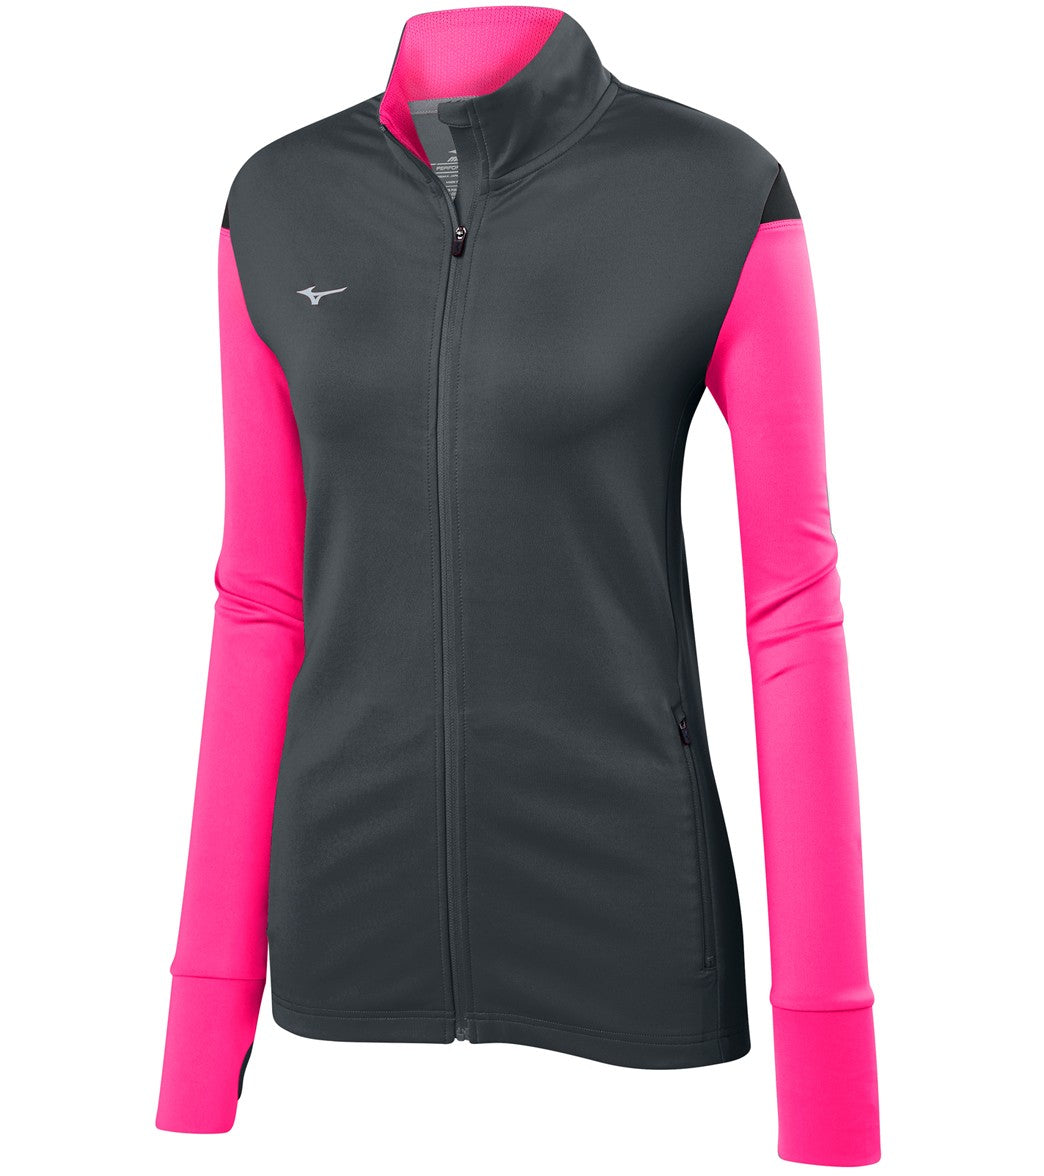 Mizuno Girls' Horizon Full Zip Volleyball Jacket - Charcoal/Shocking Pink/Black Large Cotton/Polyester - Swimoutlet.com